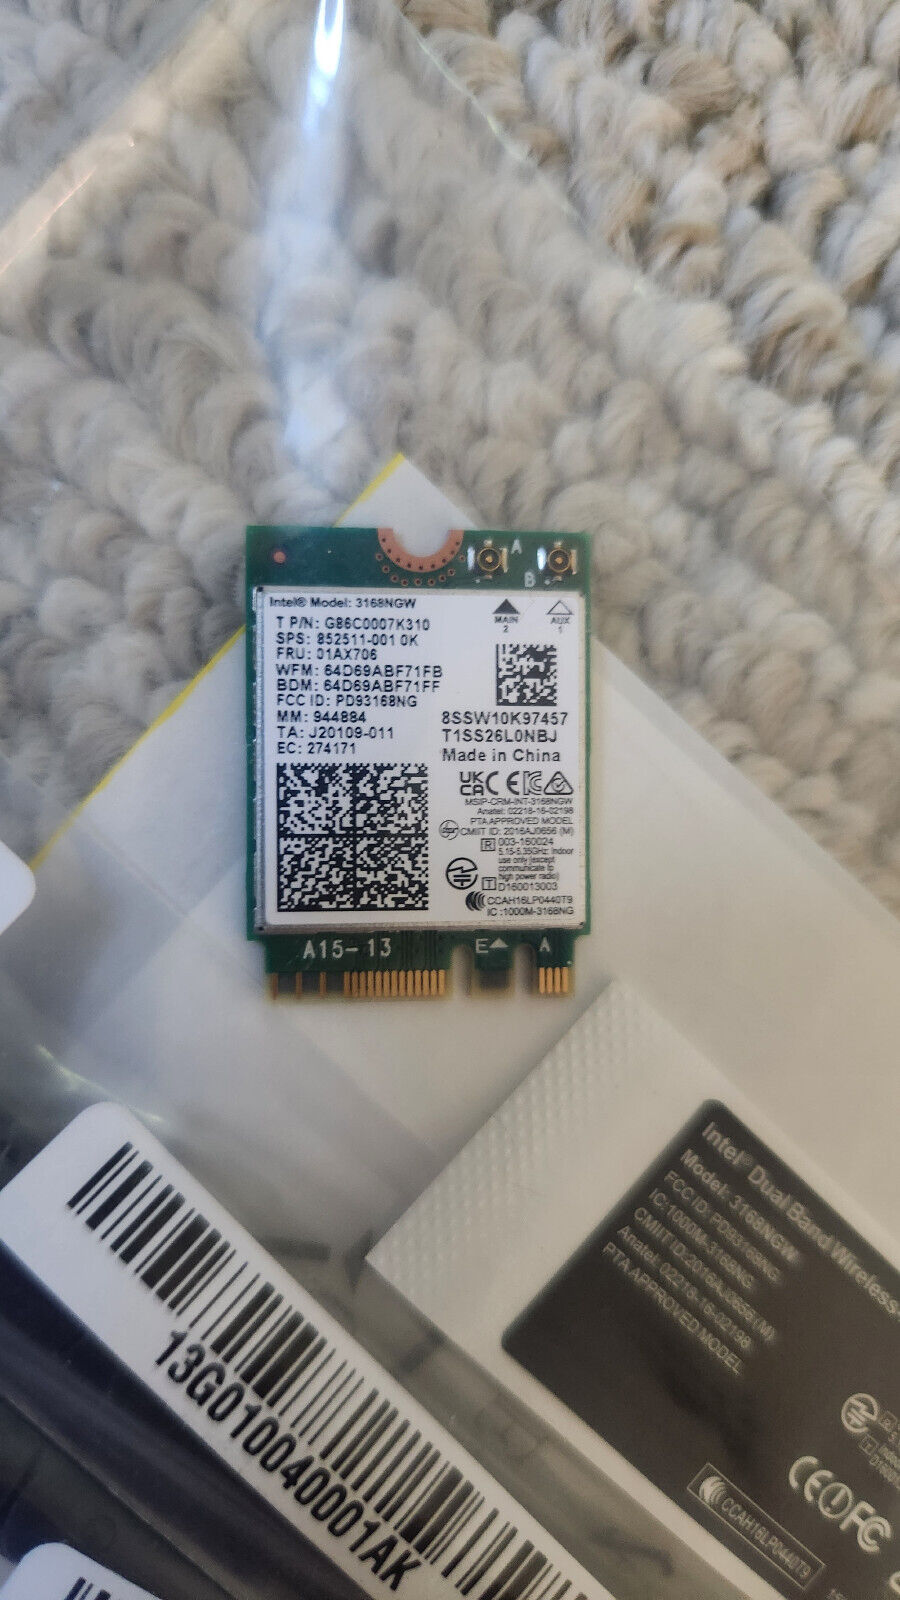 Intel Wireless AC 3168NGW kit dual band WiFi card w/Bluetooth